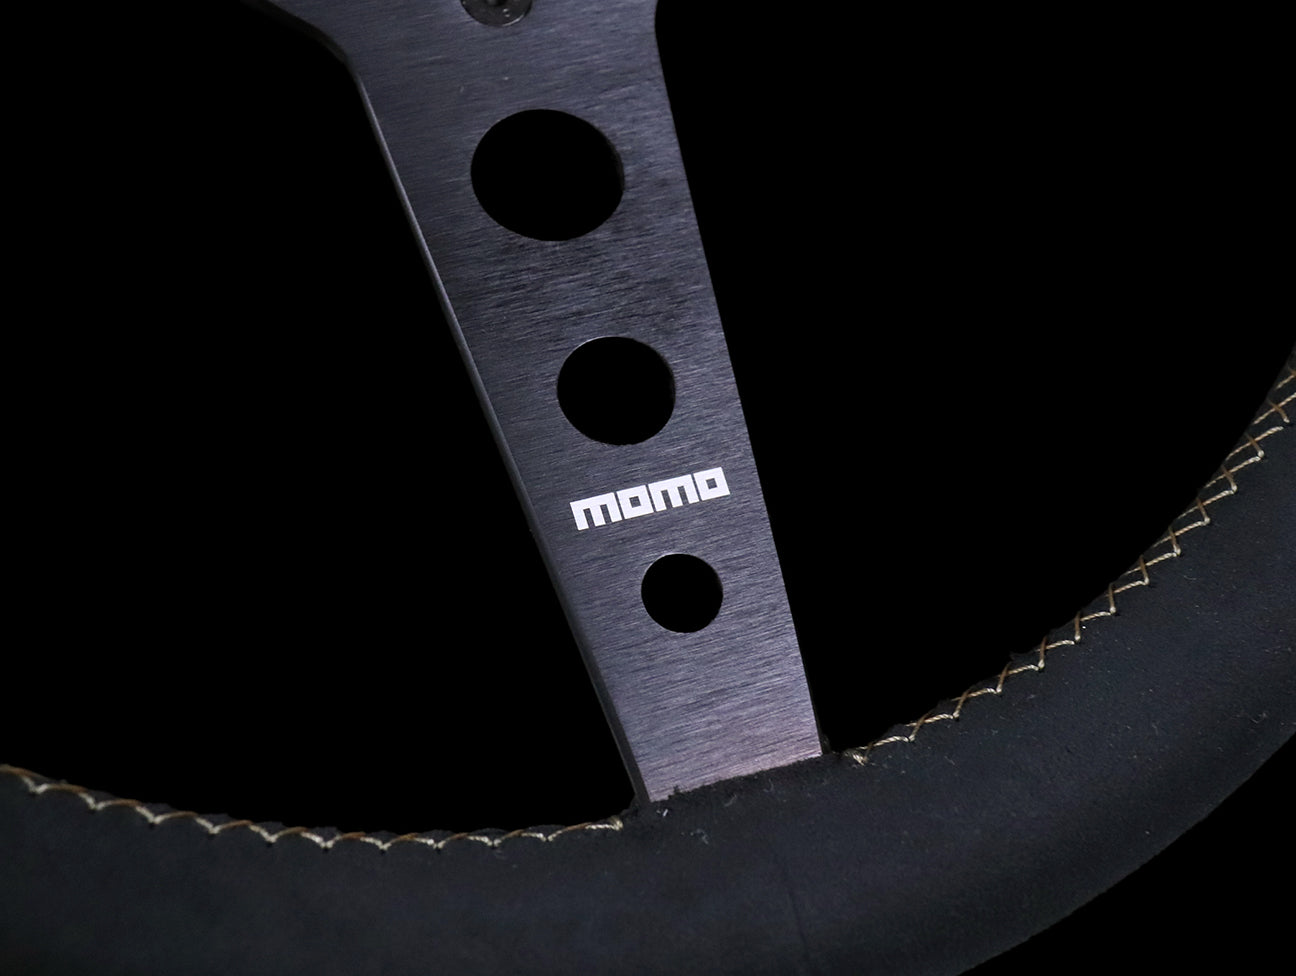 Momo X Hot Wheels Limted Edition Steering Wheel - 350mm Black Alcantara Suede w/ Gold Stitching